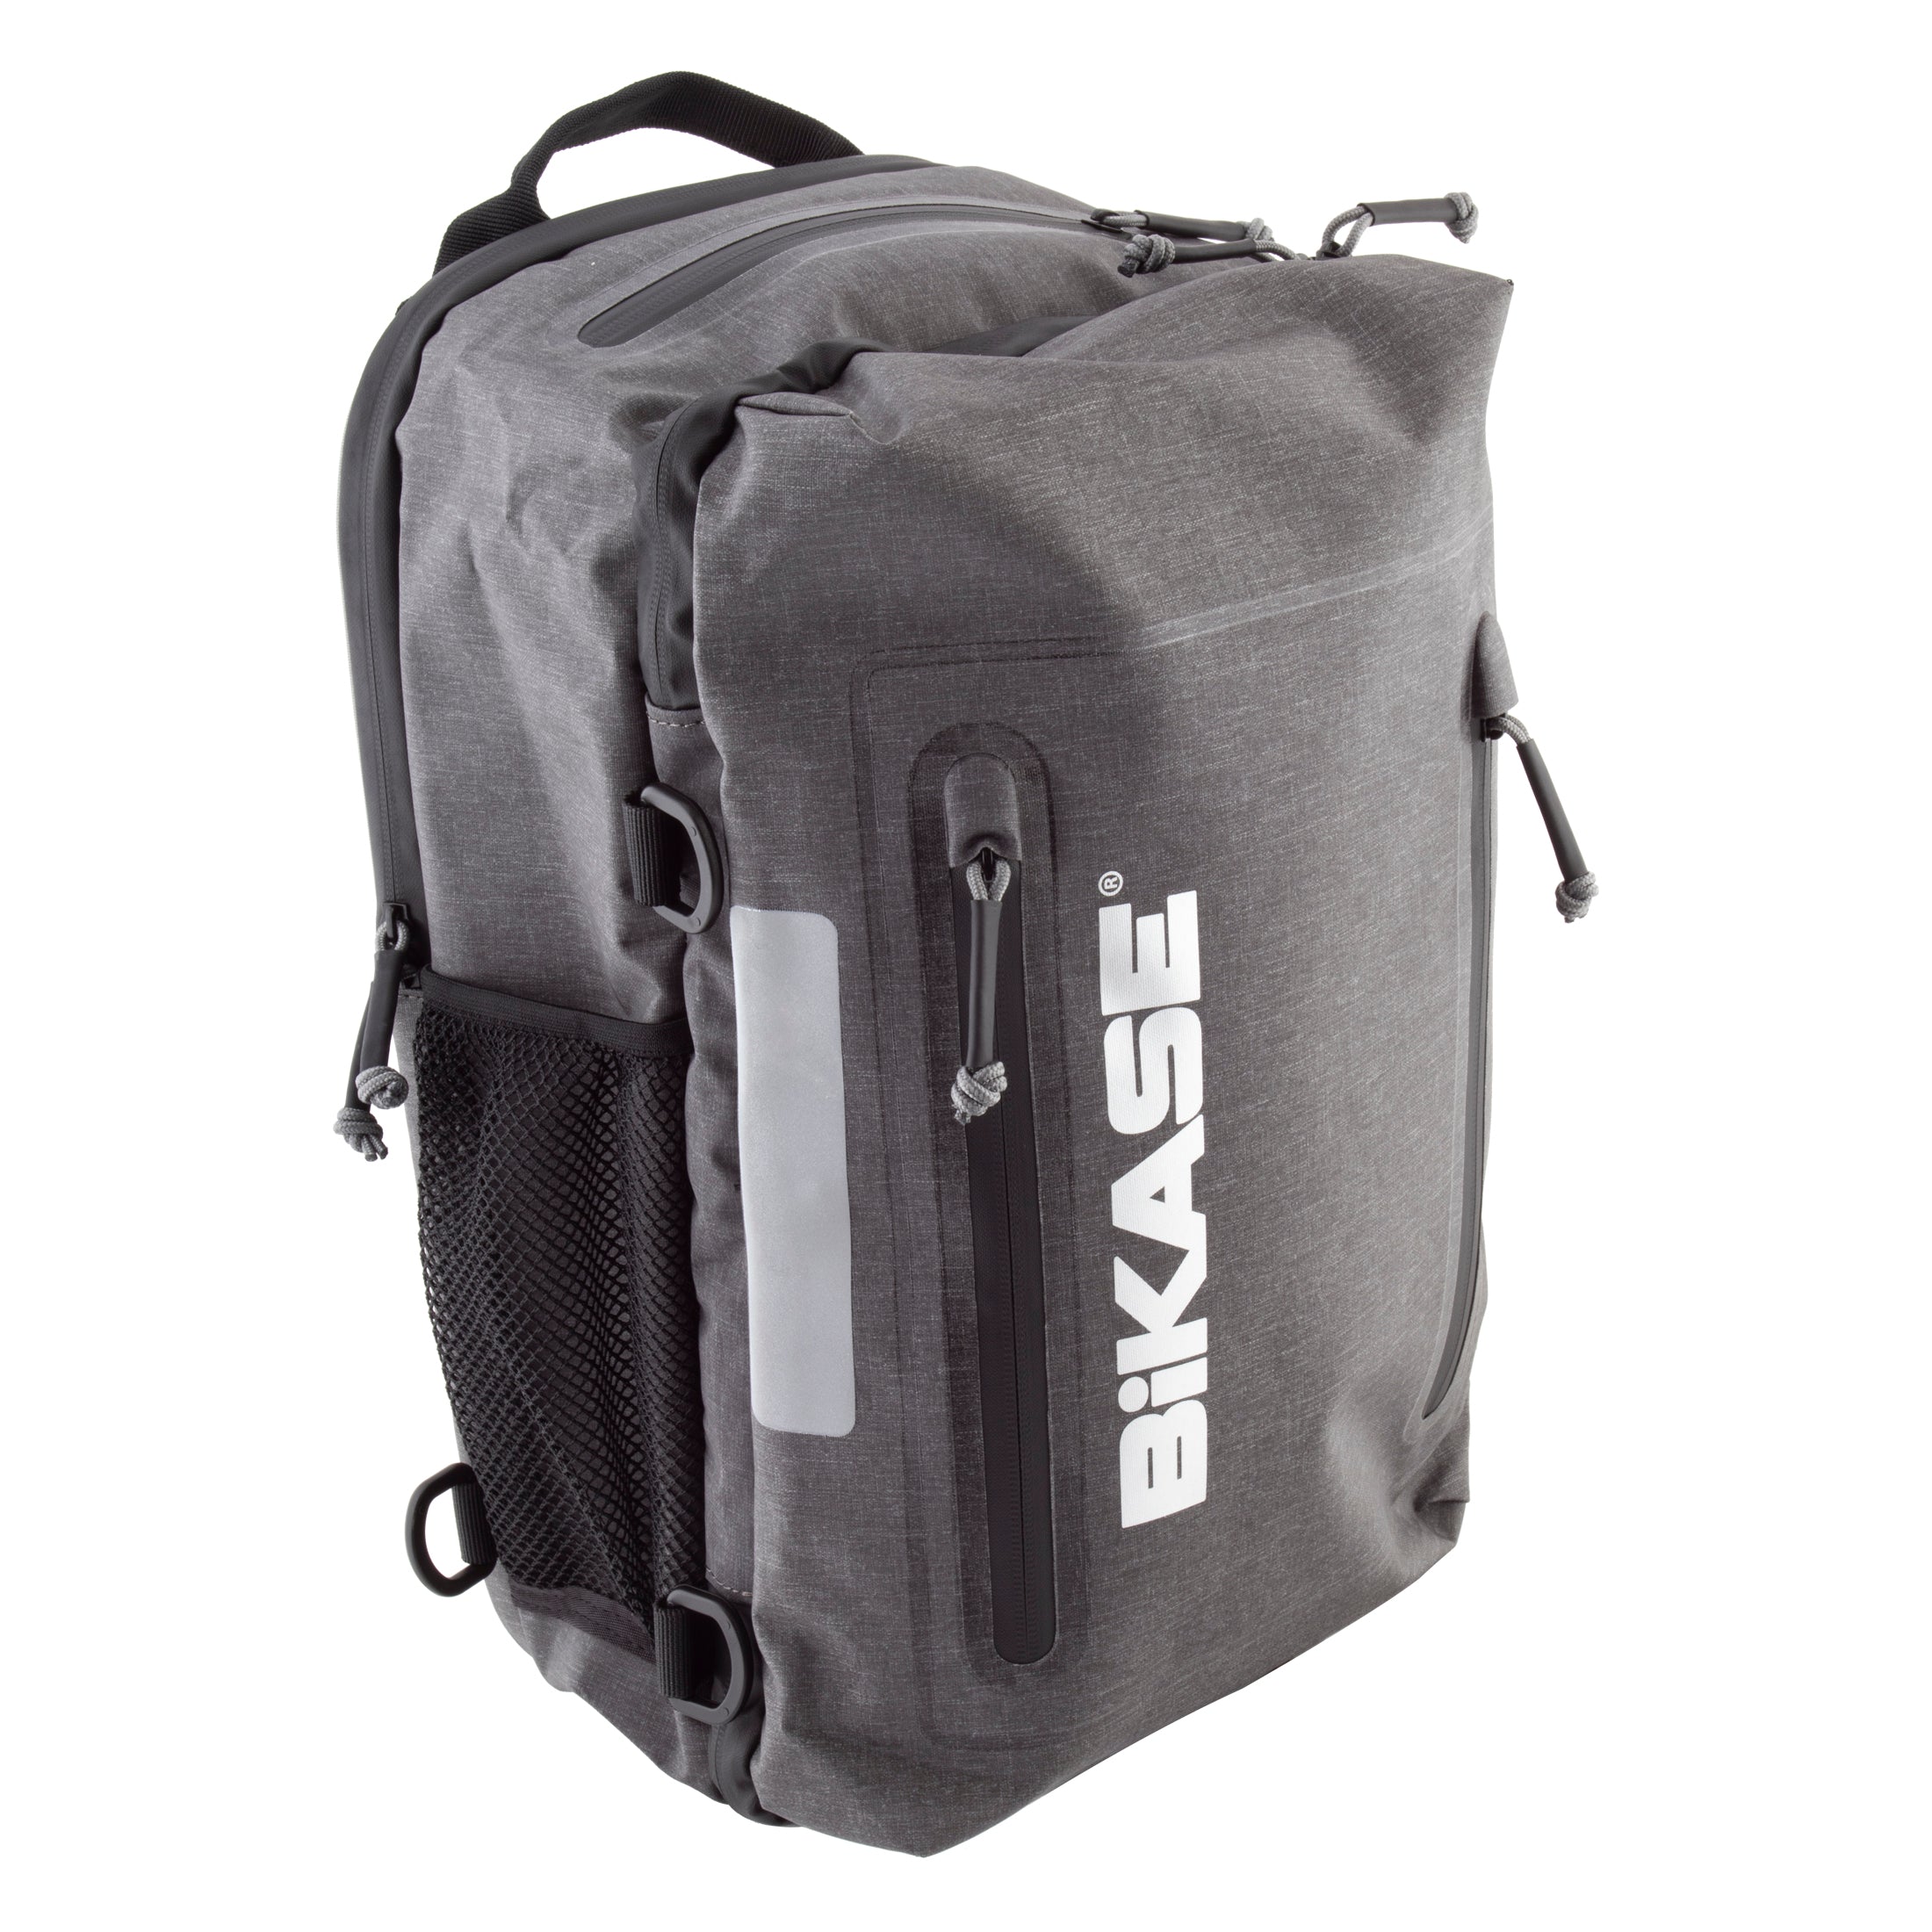 BiKase 2045G Urbanator Backpack Pannier Combo Bag Grey